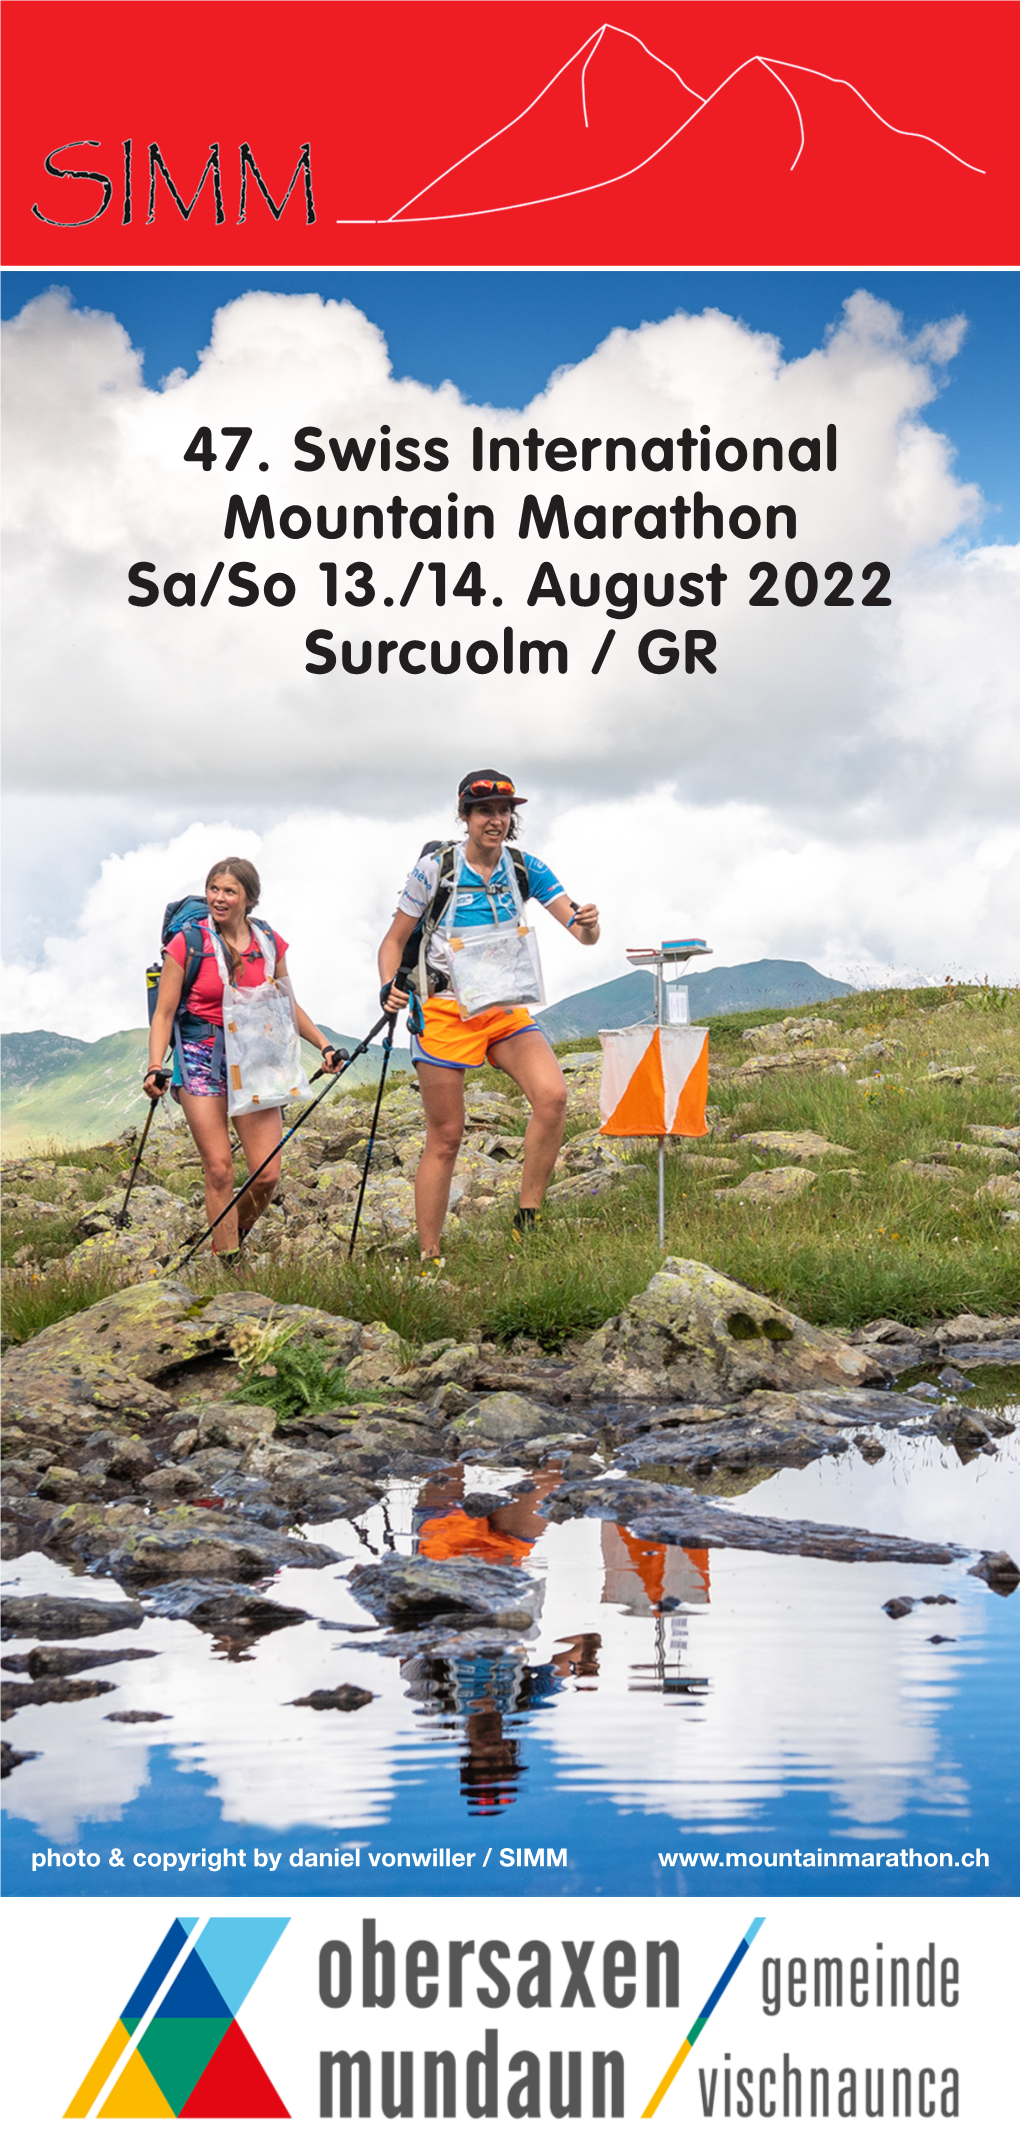 47. Swiss International Mountain Marathon Sa/So 13./14. August 2022 Surcuolm / GR